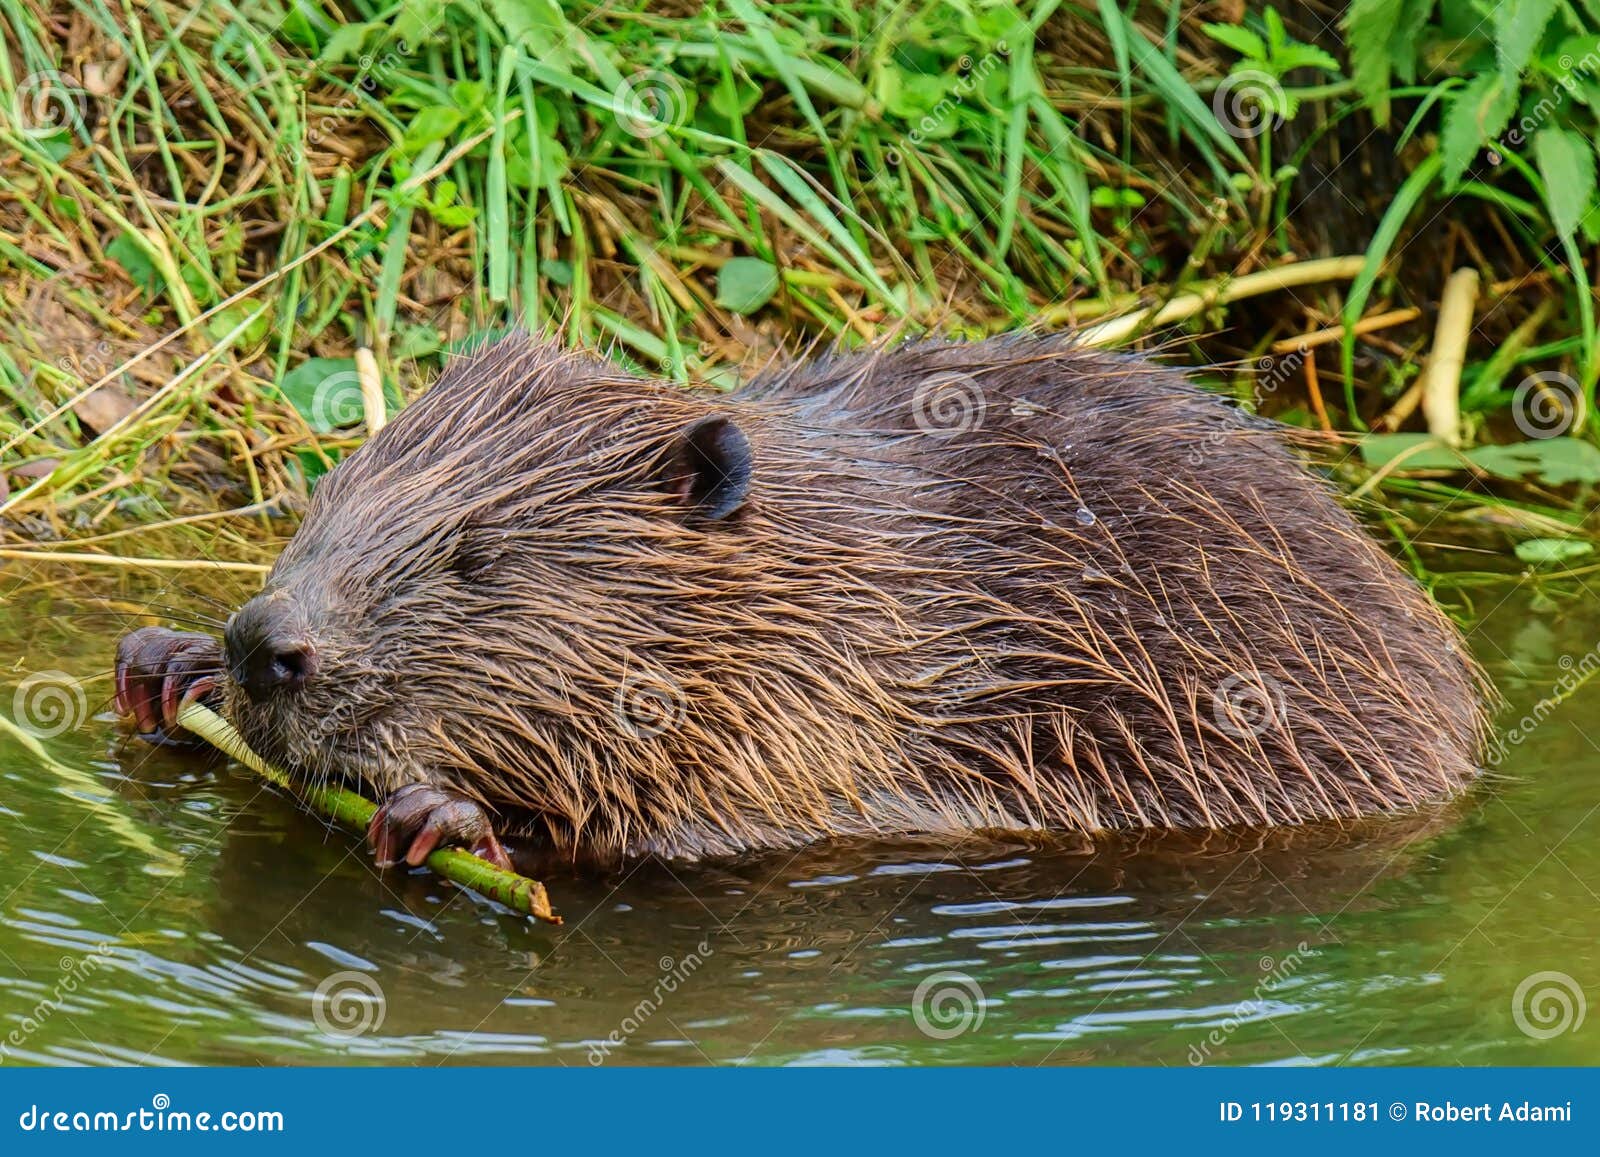 big european beaver eats food with closed eyes